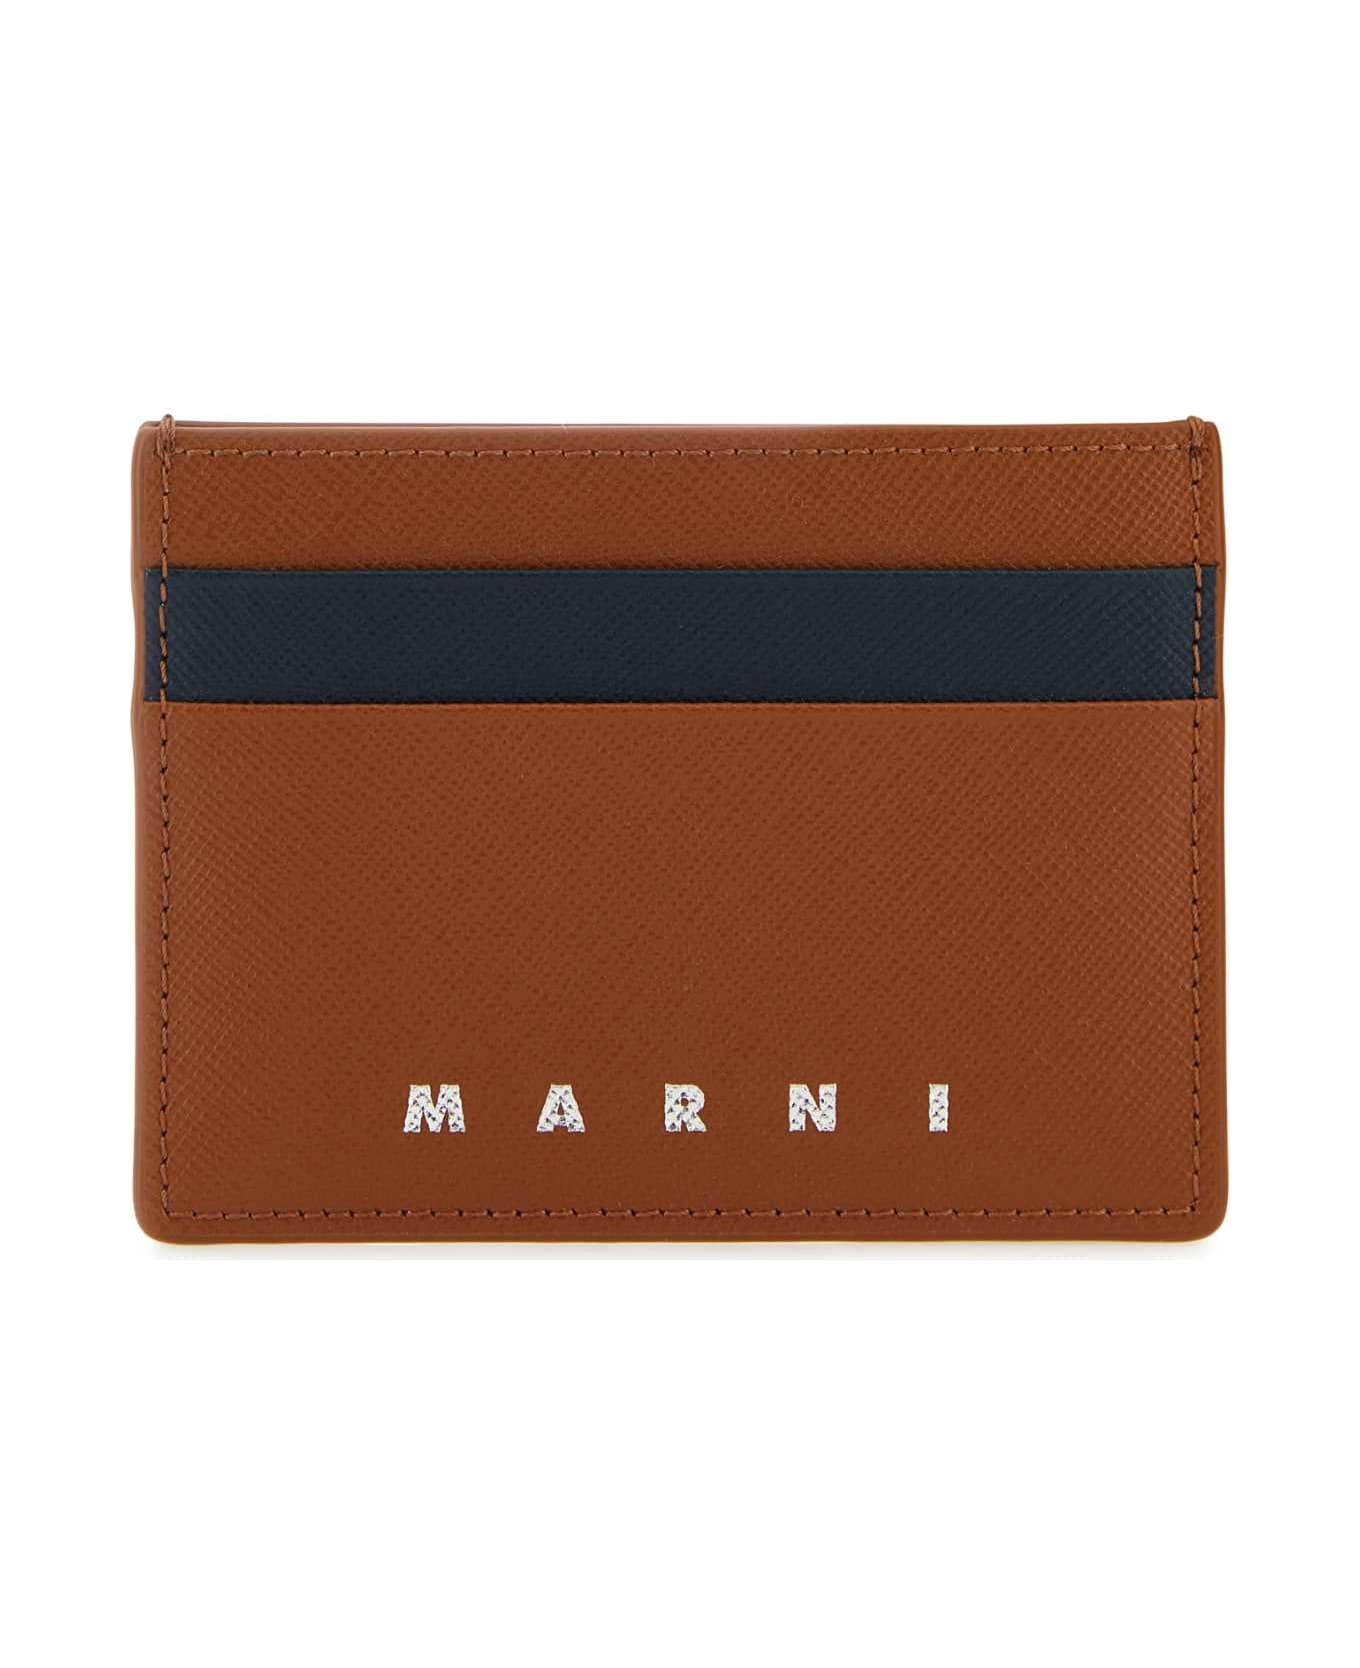 Marni Two-tone Leather Cardholder - MOCANIGHTBLUE 財布